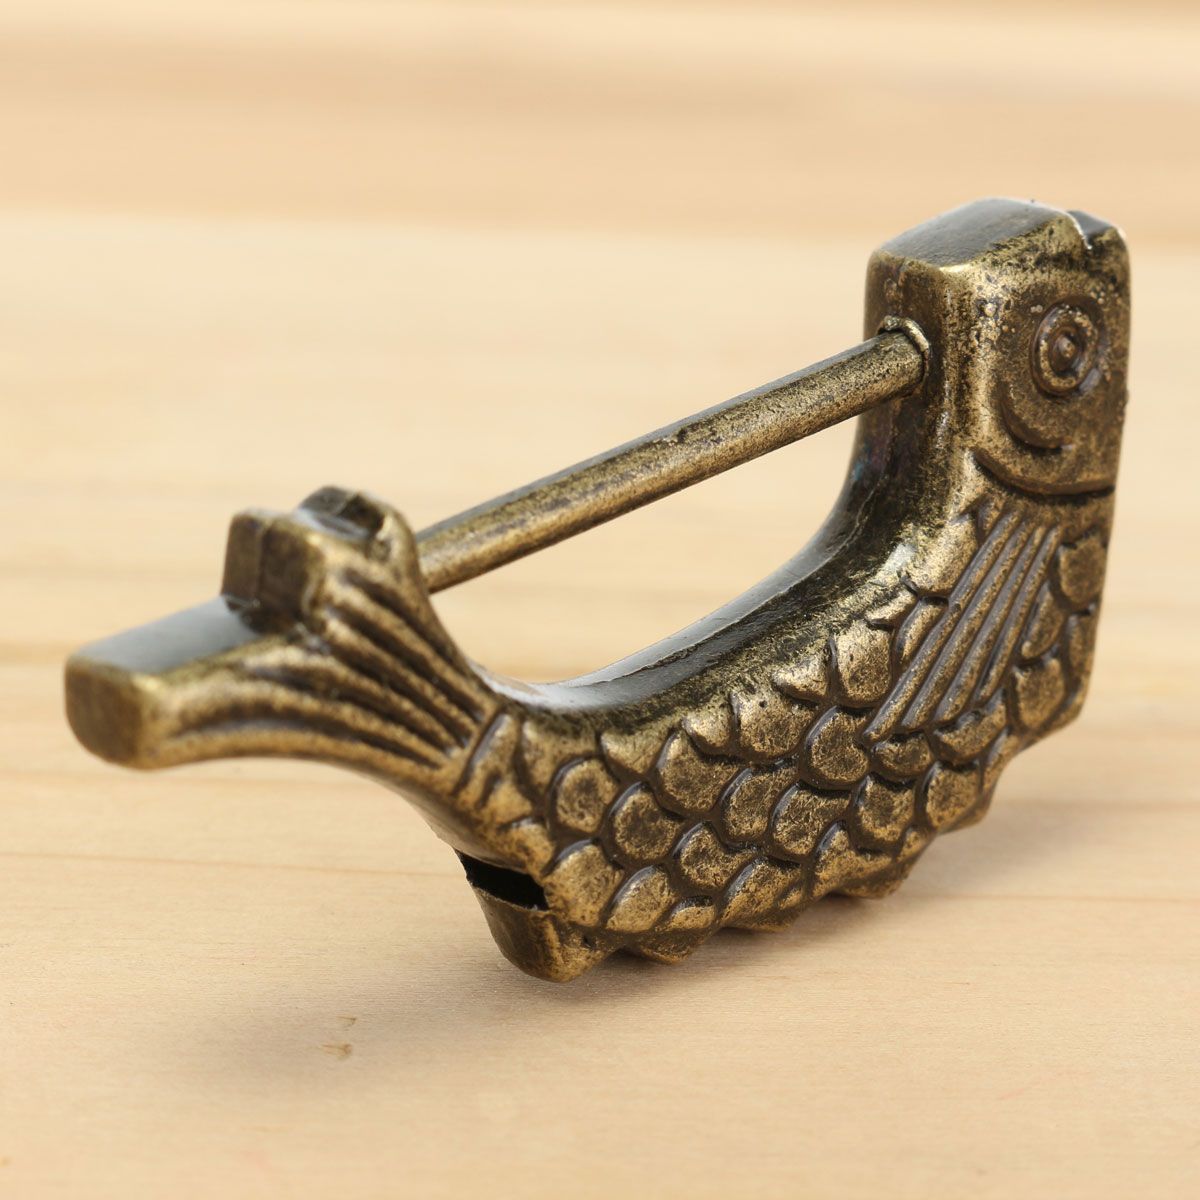 Chinese-Antique-Old-Style-Retro-Brass-Padlock-Jewelry-Box-Fish-Pattern-Lock-with-Key-1023006